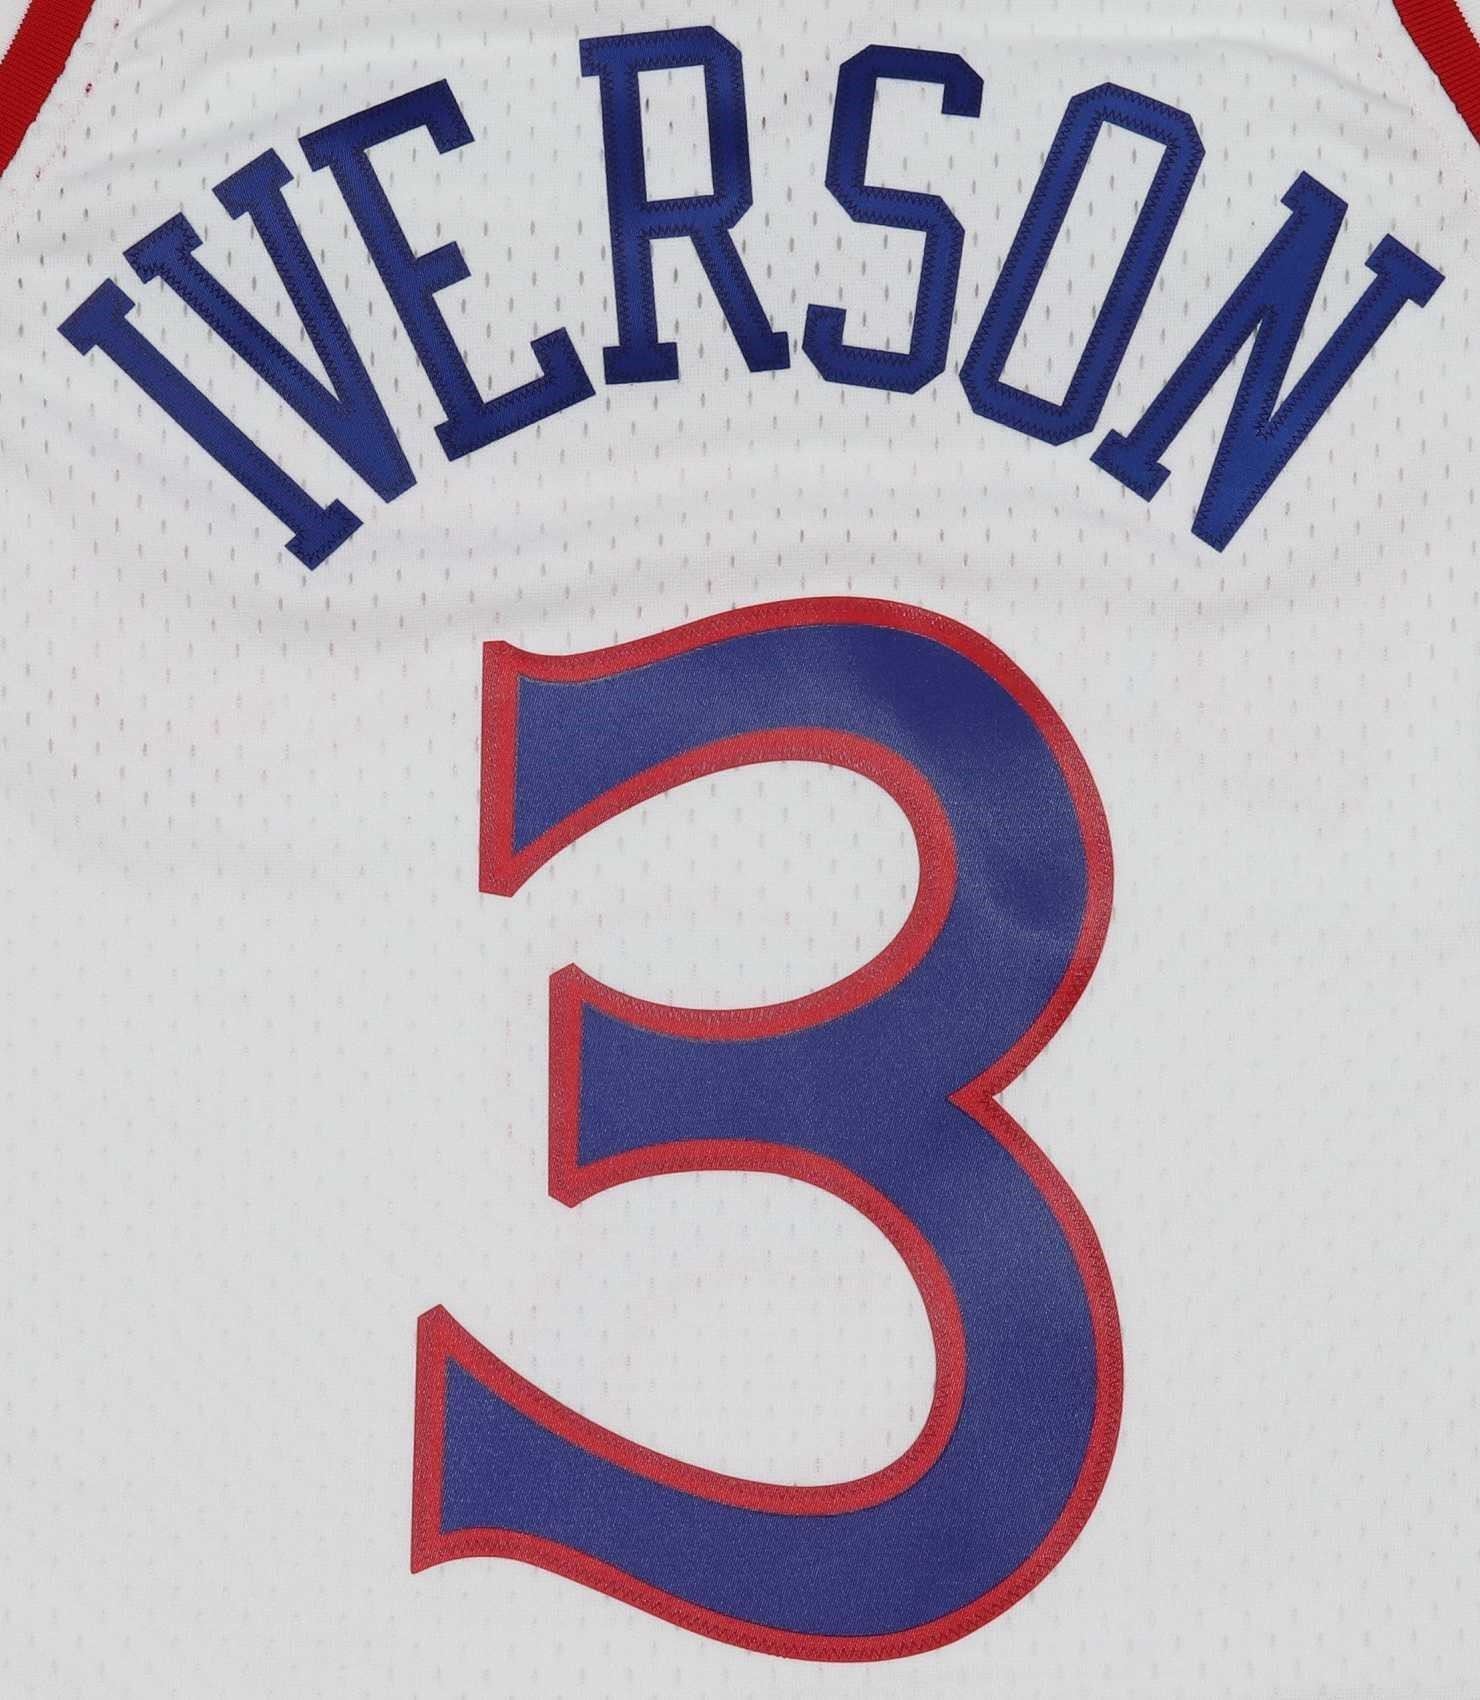 Allen Iverson #3 Philadelphia 76ers NBA Kids Swingman Home Jersey Mitchell & Ness